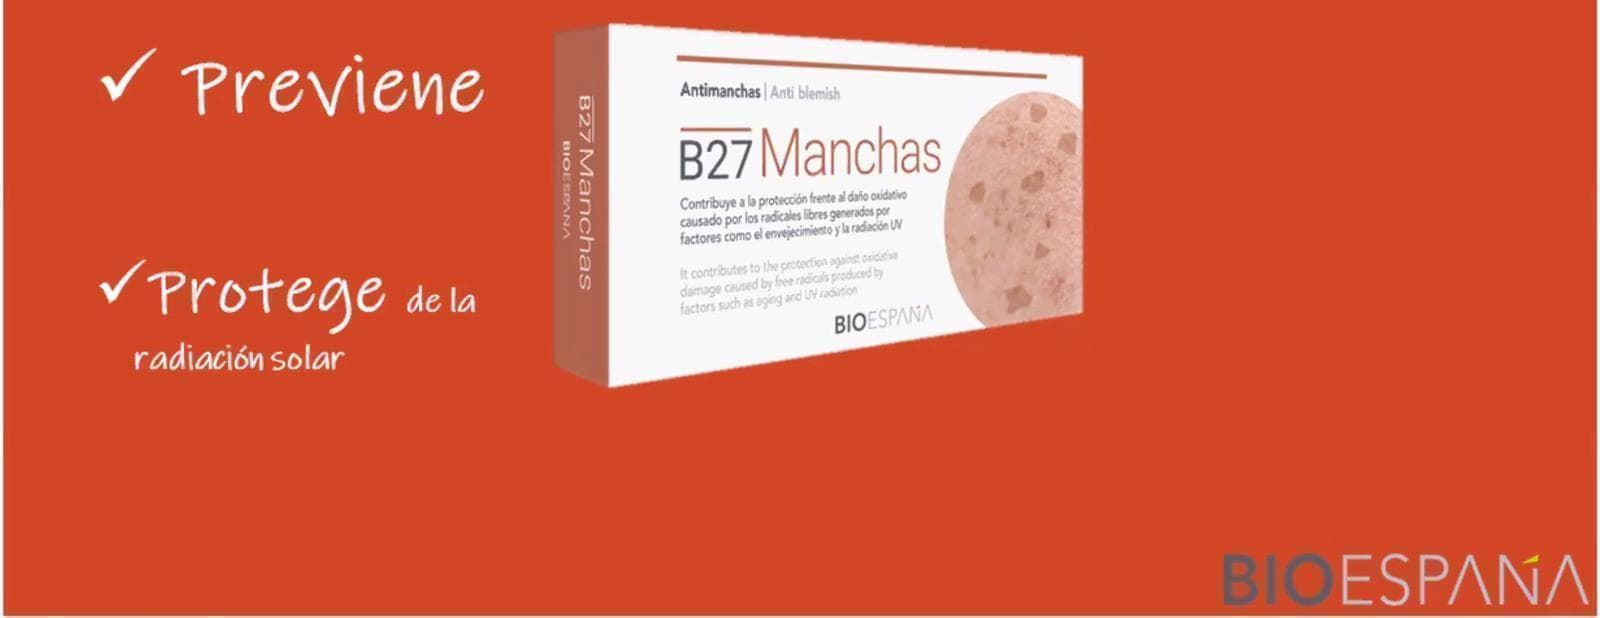 Bioespaña - B27 Manchas - Imagen 1